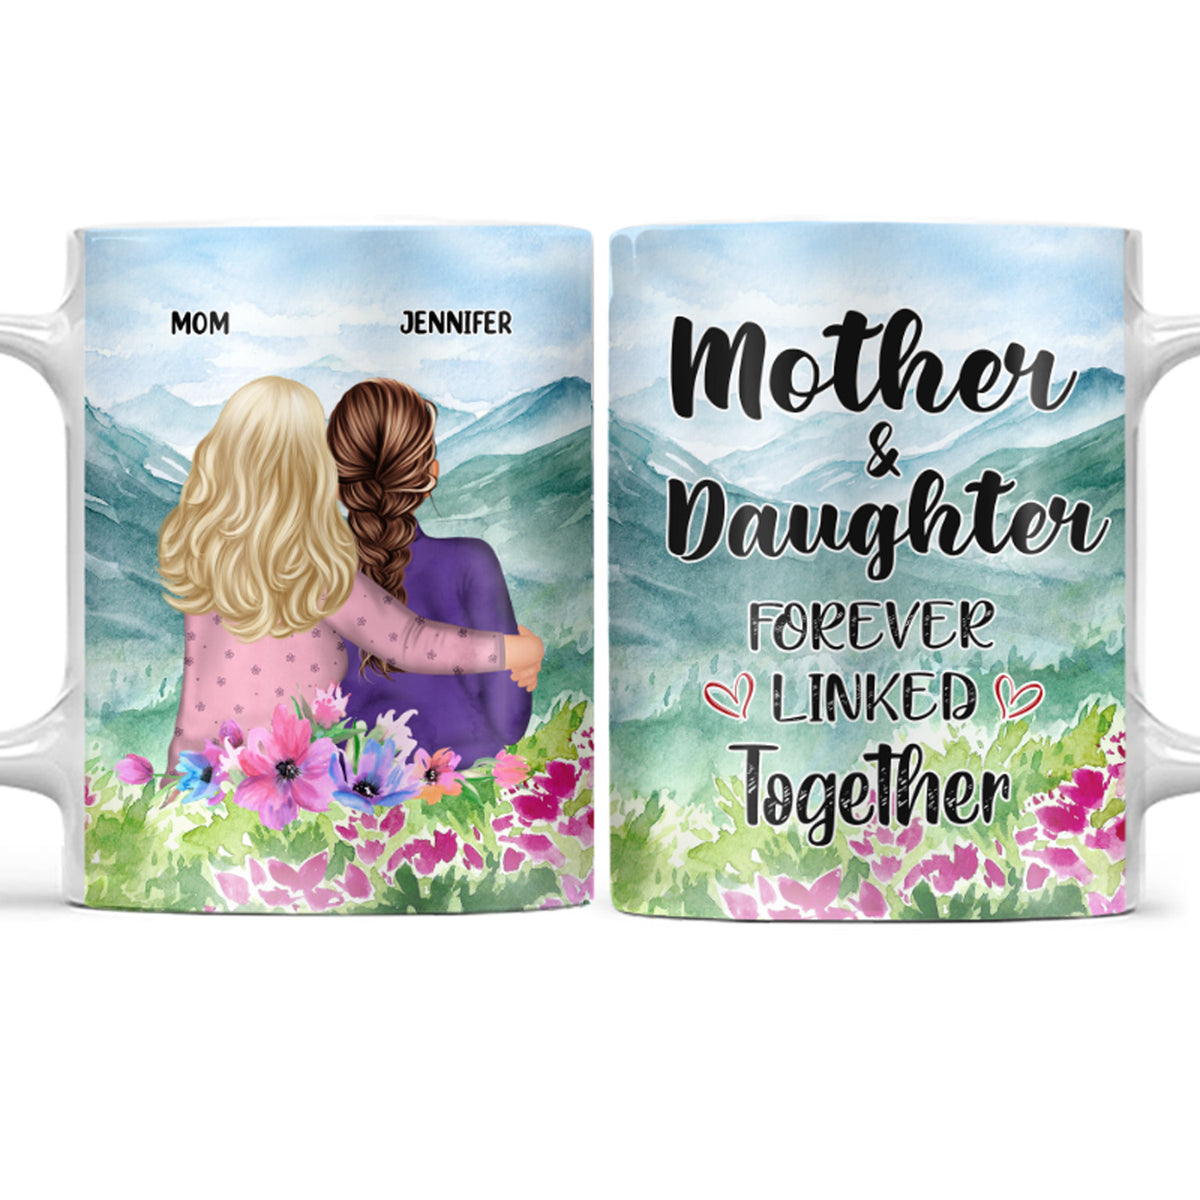 Mommy Of The Birthday Girl Daughter Matching Family For Mom Ceramic Mug  11oz 15oz 